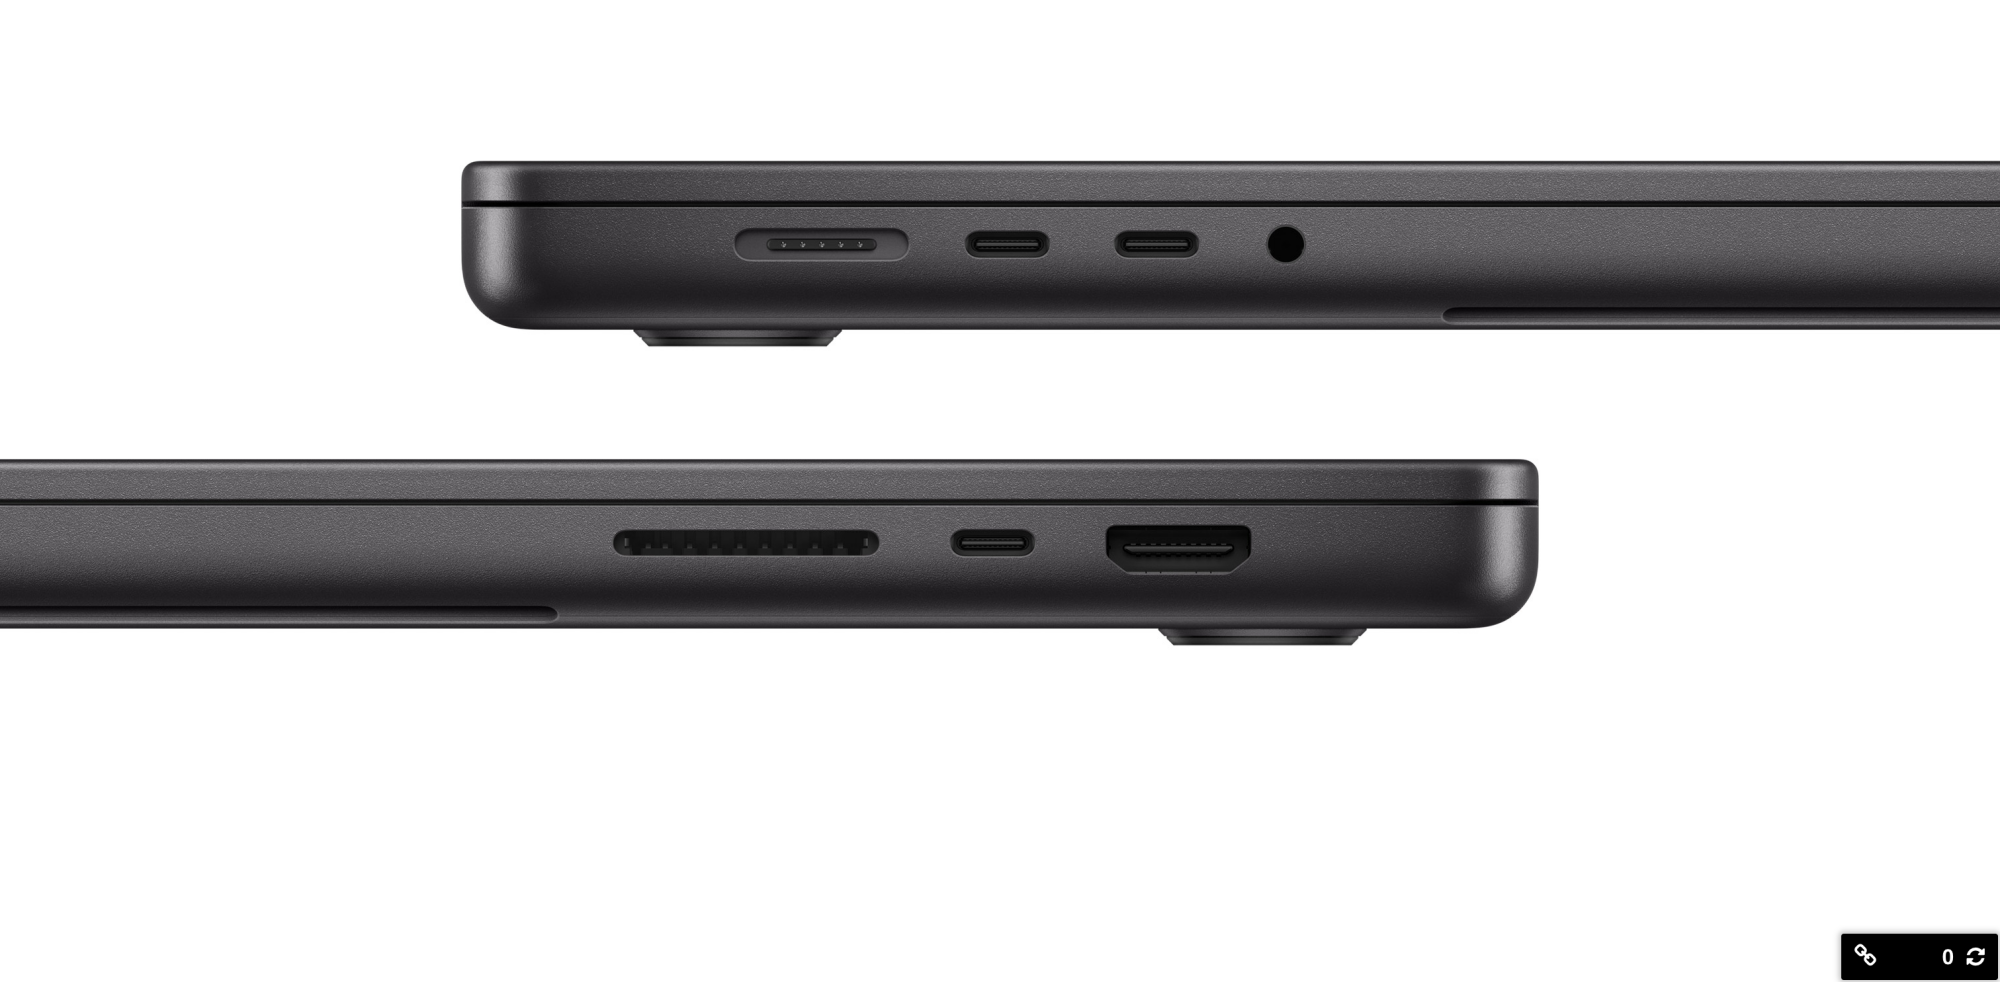 14-inch MacBook Pro ports